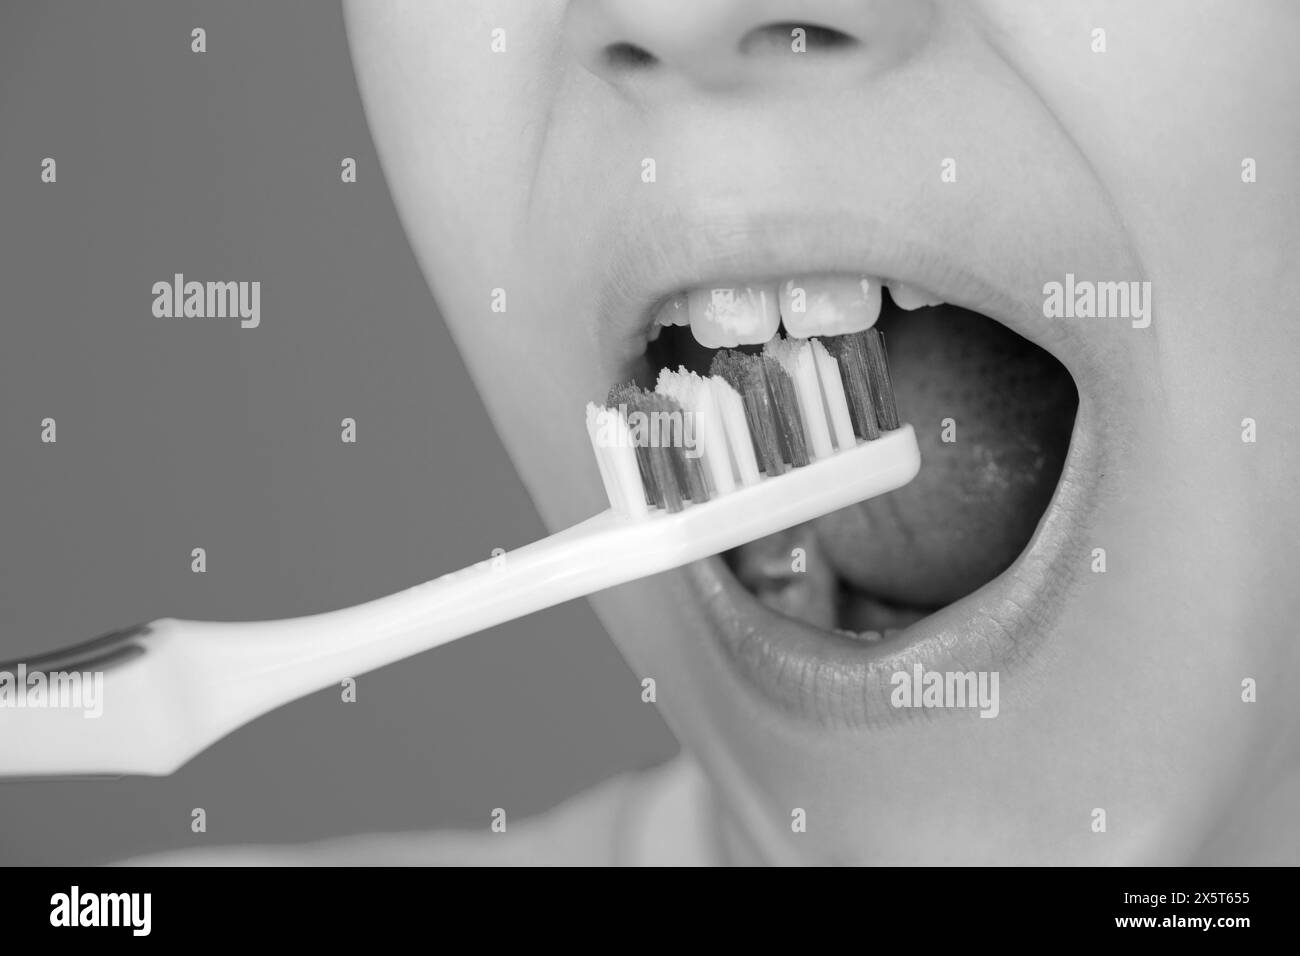 Dental hygiene. Little kid brushing her teeth. Kid boy brushing teeth. Health care, dental hygiene. Child shows toothbrushes. Bad teeth child Stock Photo